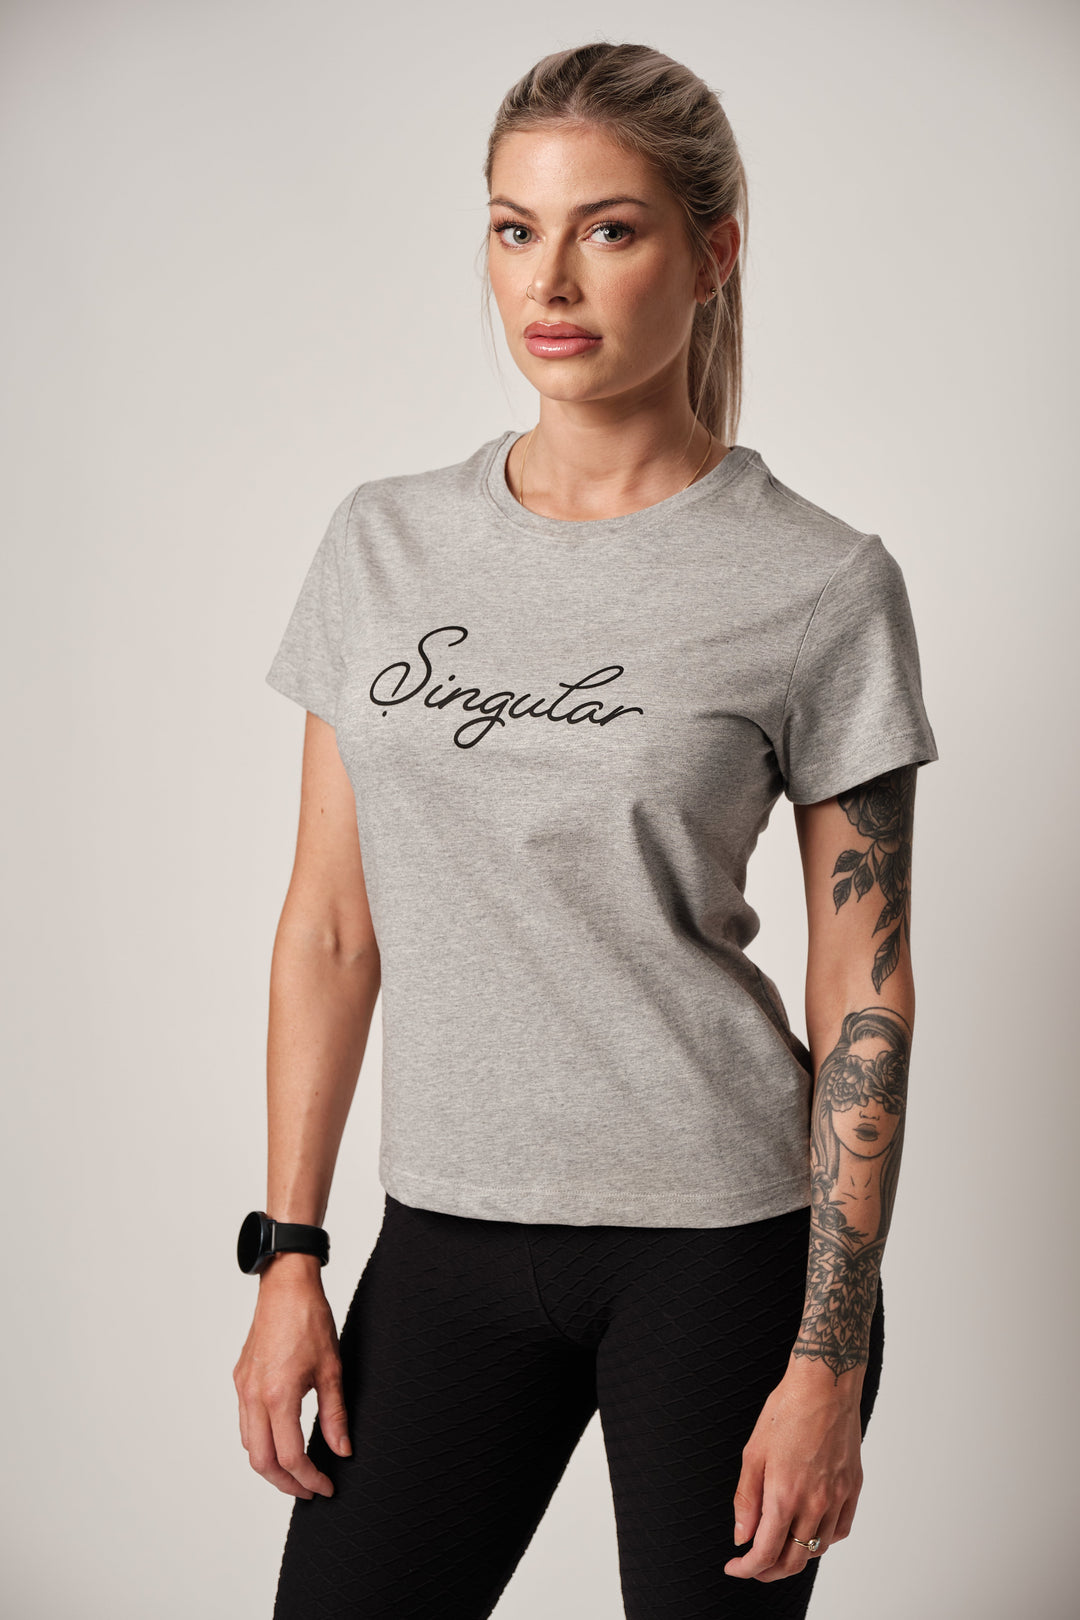 Singular Women's Basic T shirt#DarkGray